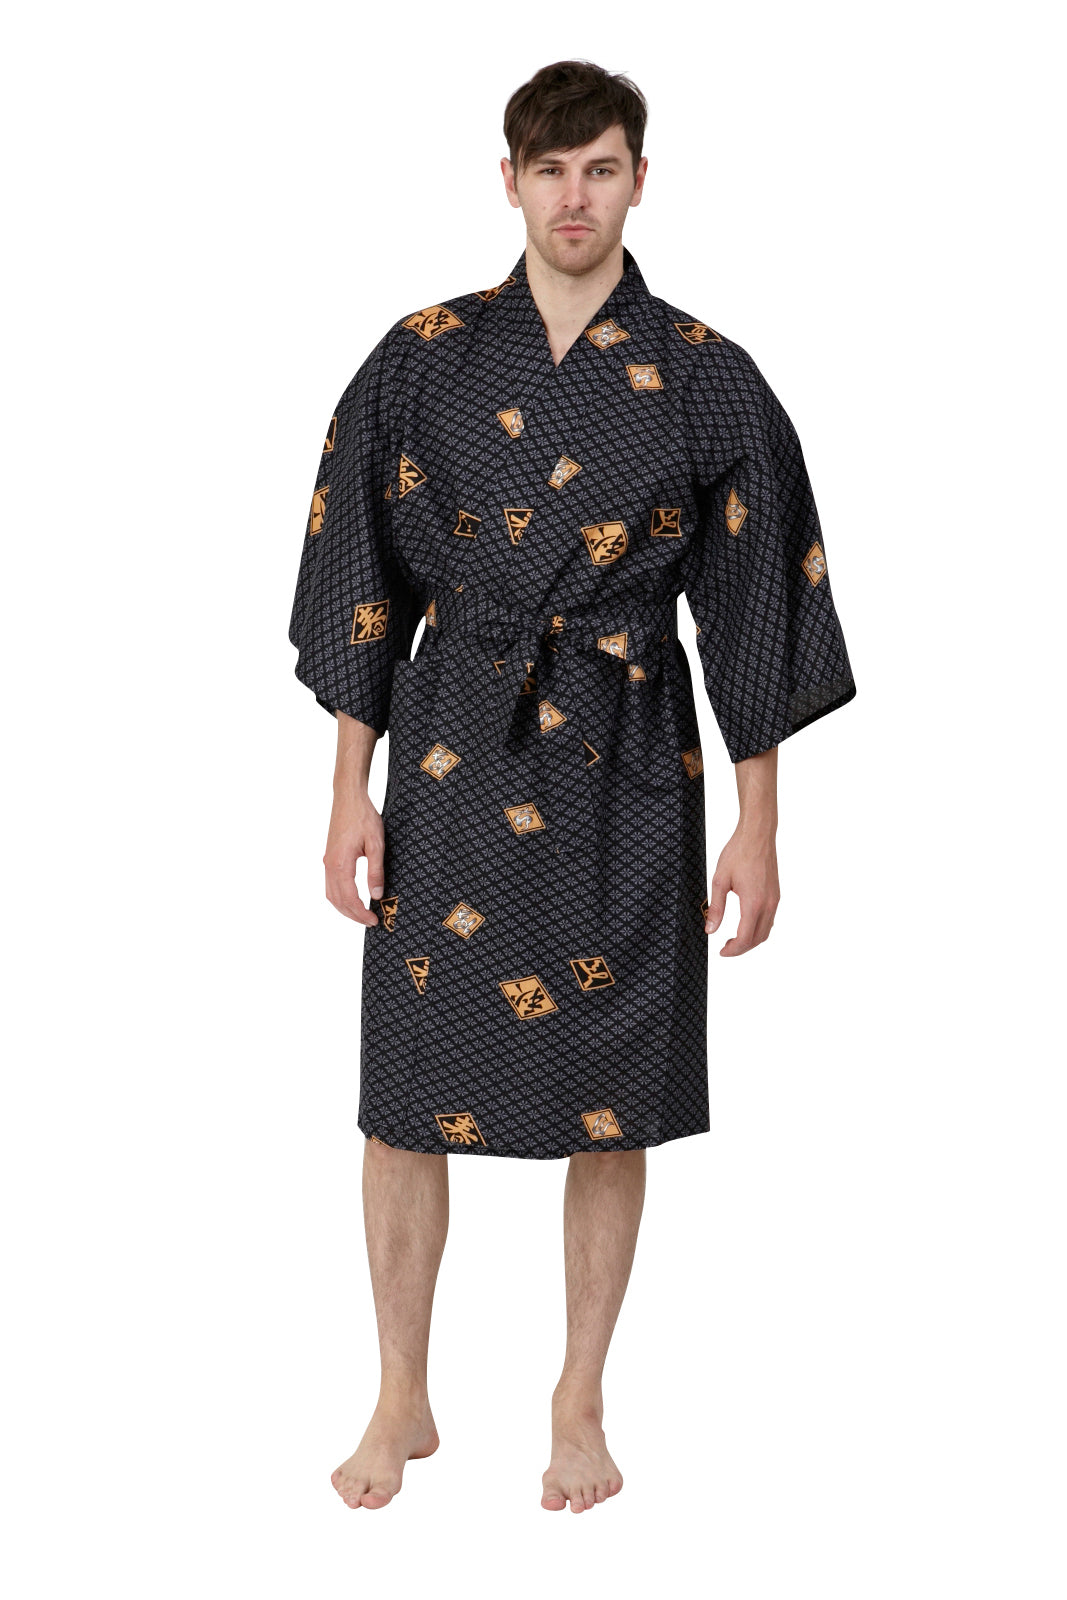 Mens Kimono Kimono Robe Kimono Male Kimono Beautiful Robes